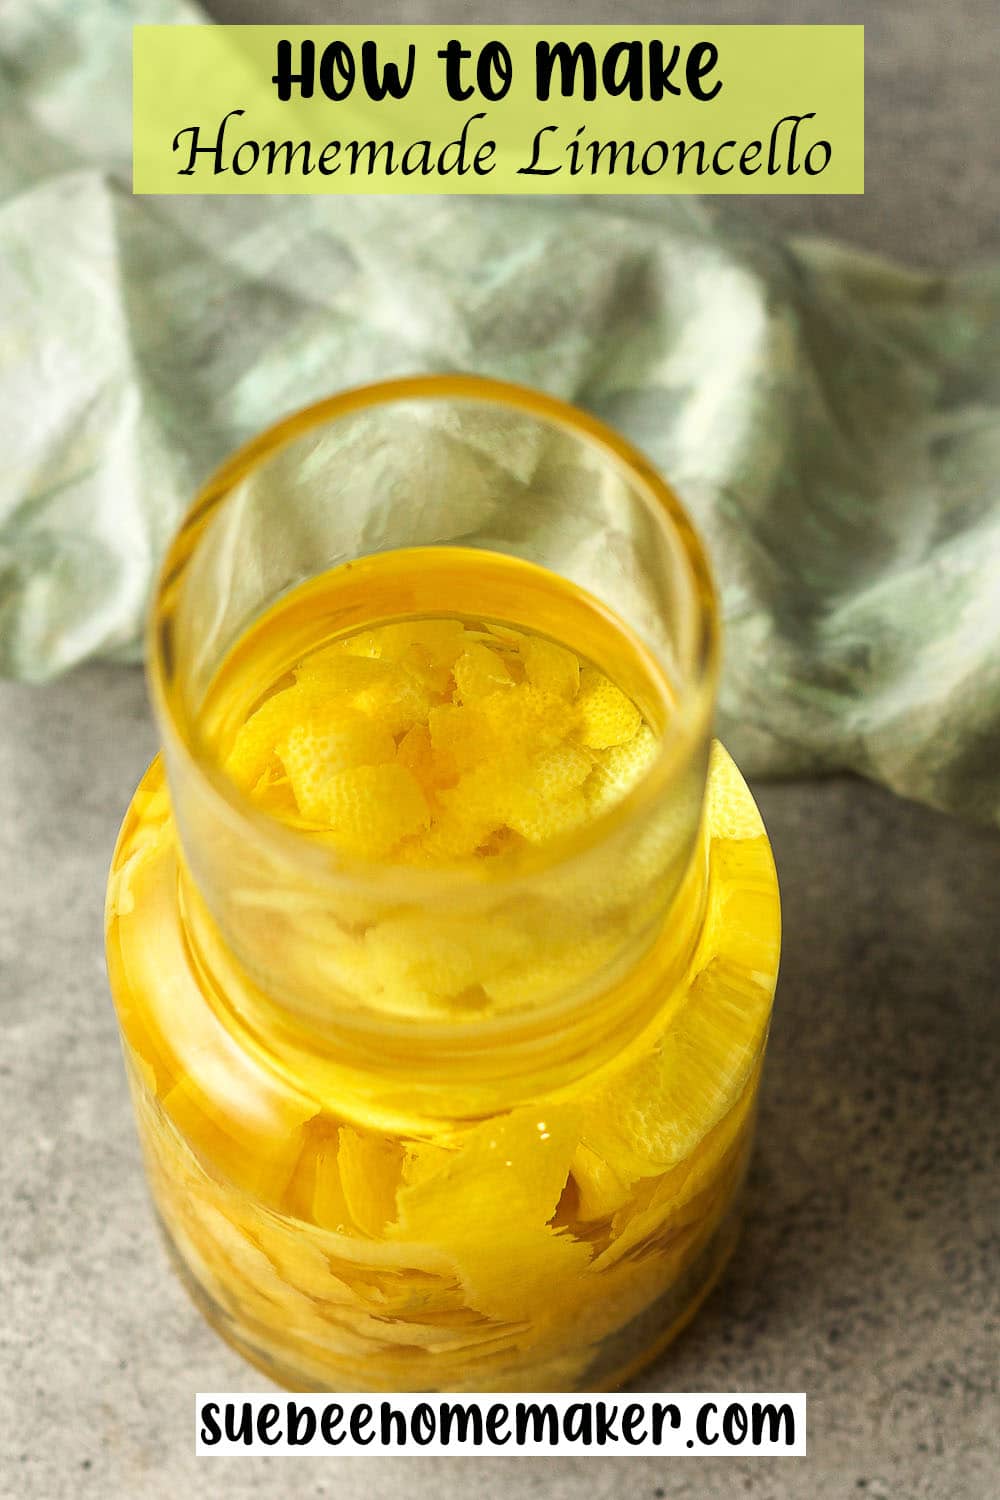 Overhead view of a large jar of lemon-infused vodka.